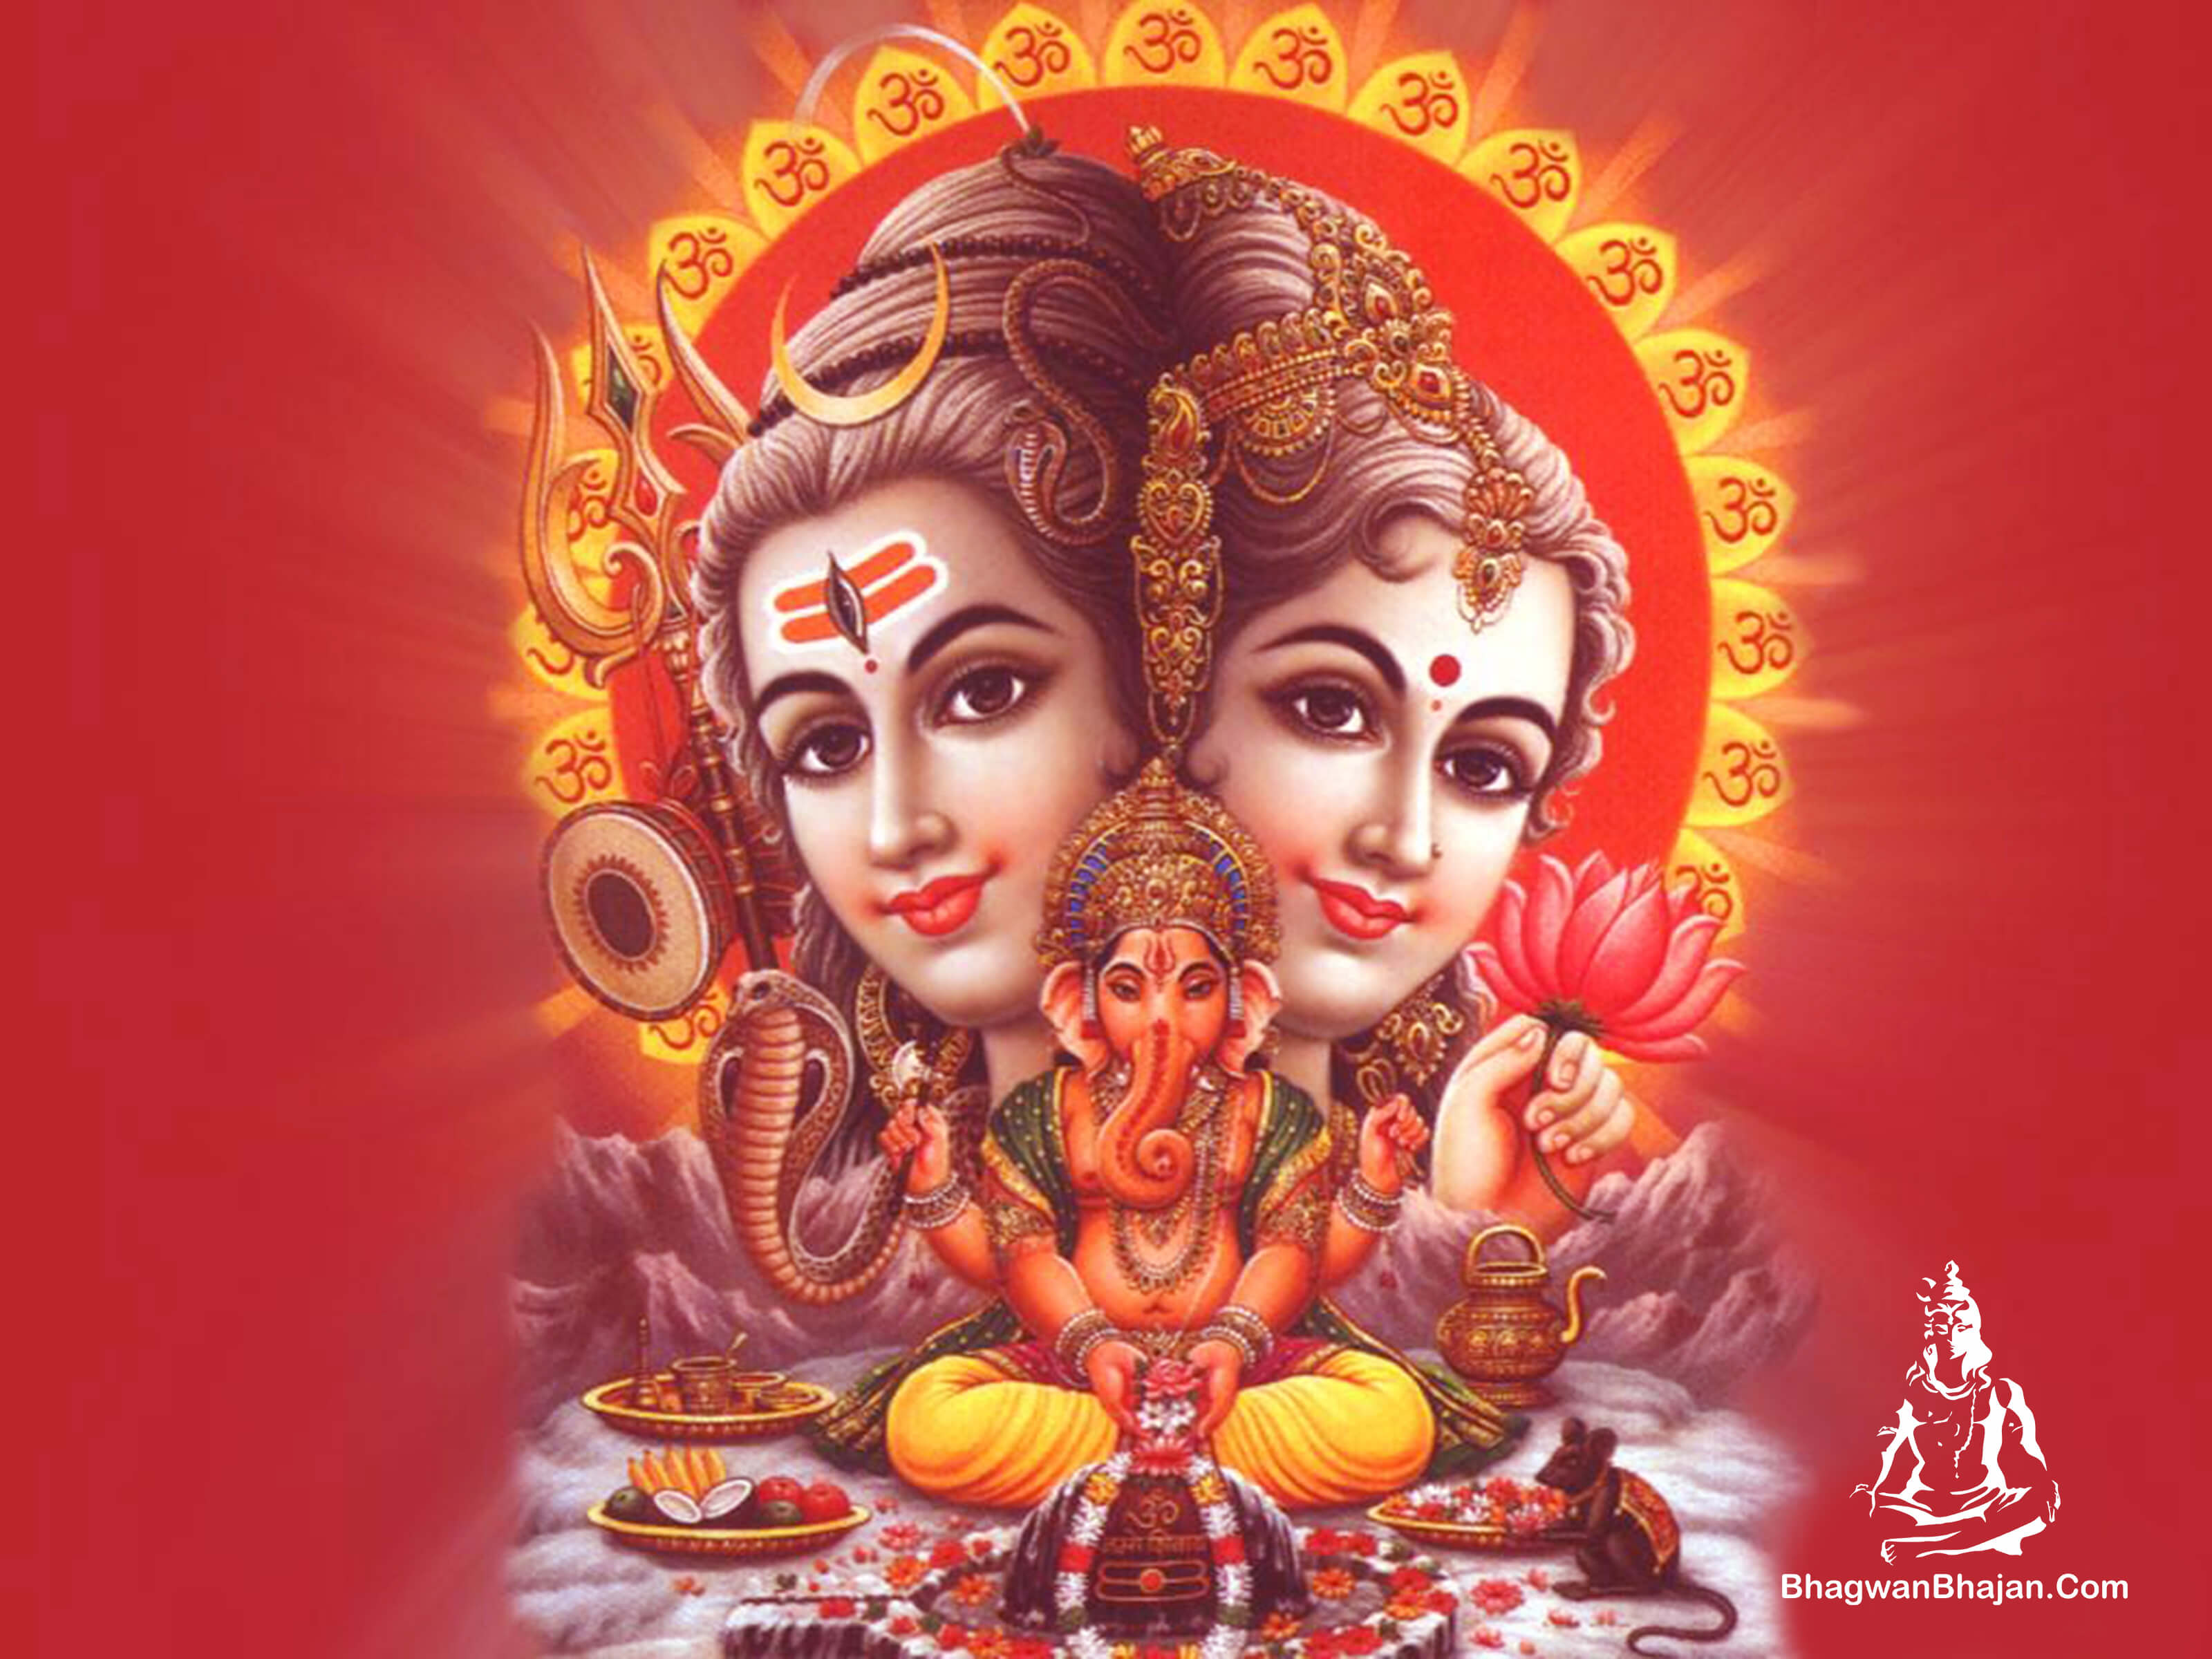 Lord Shiva e Durga by UniversalOm on DeviantArt